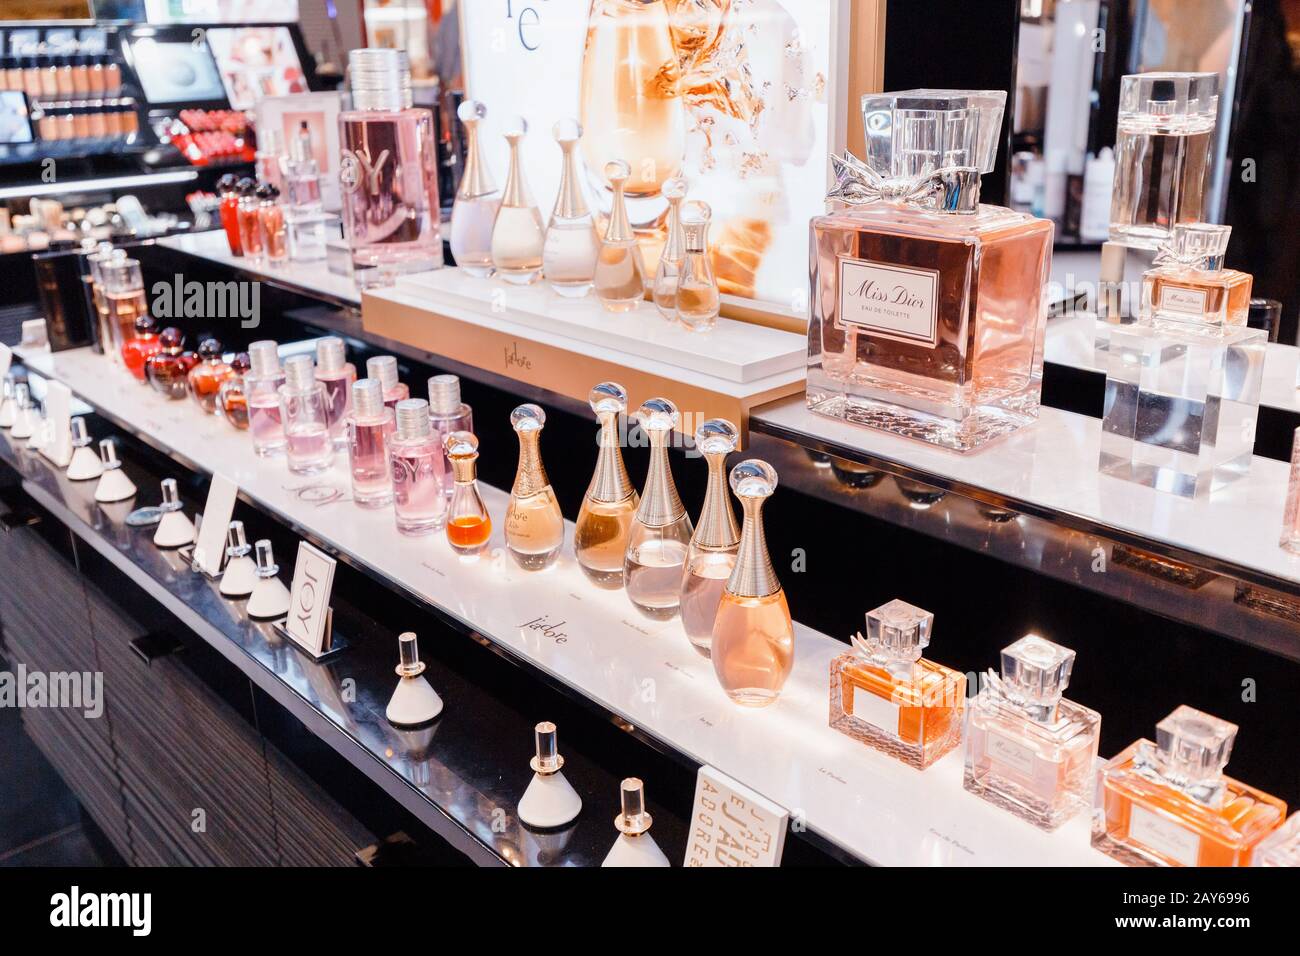 miss dior boutique perfume